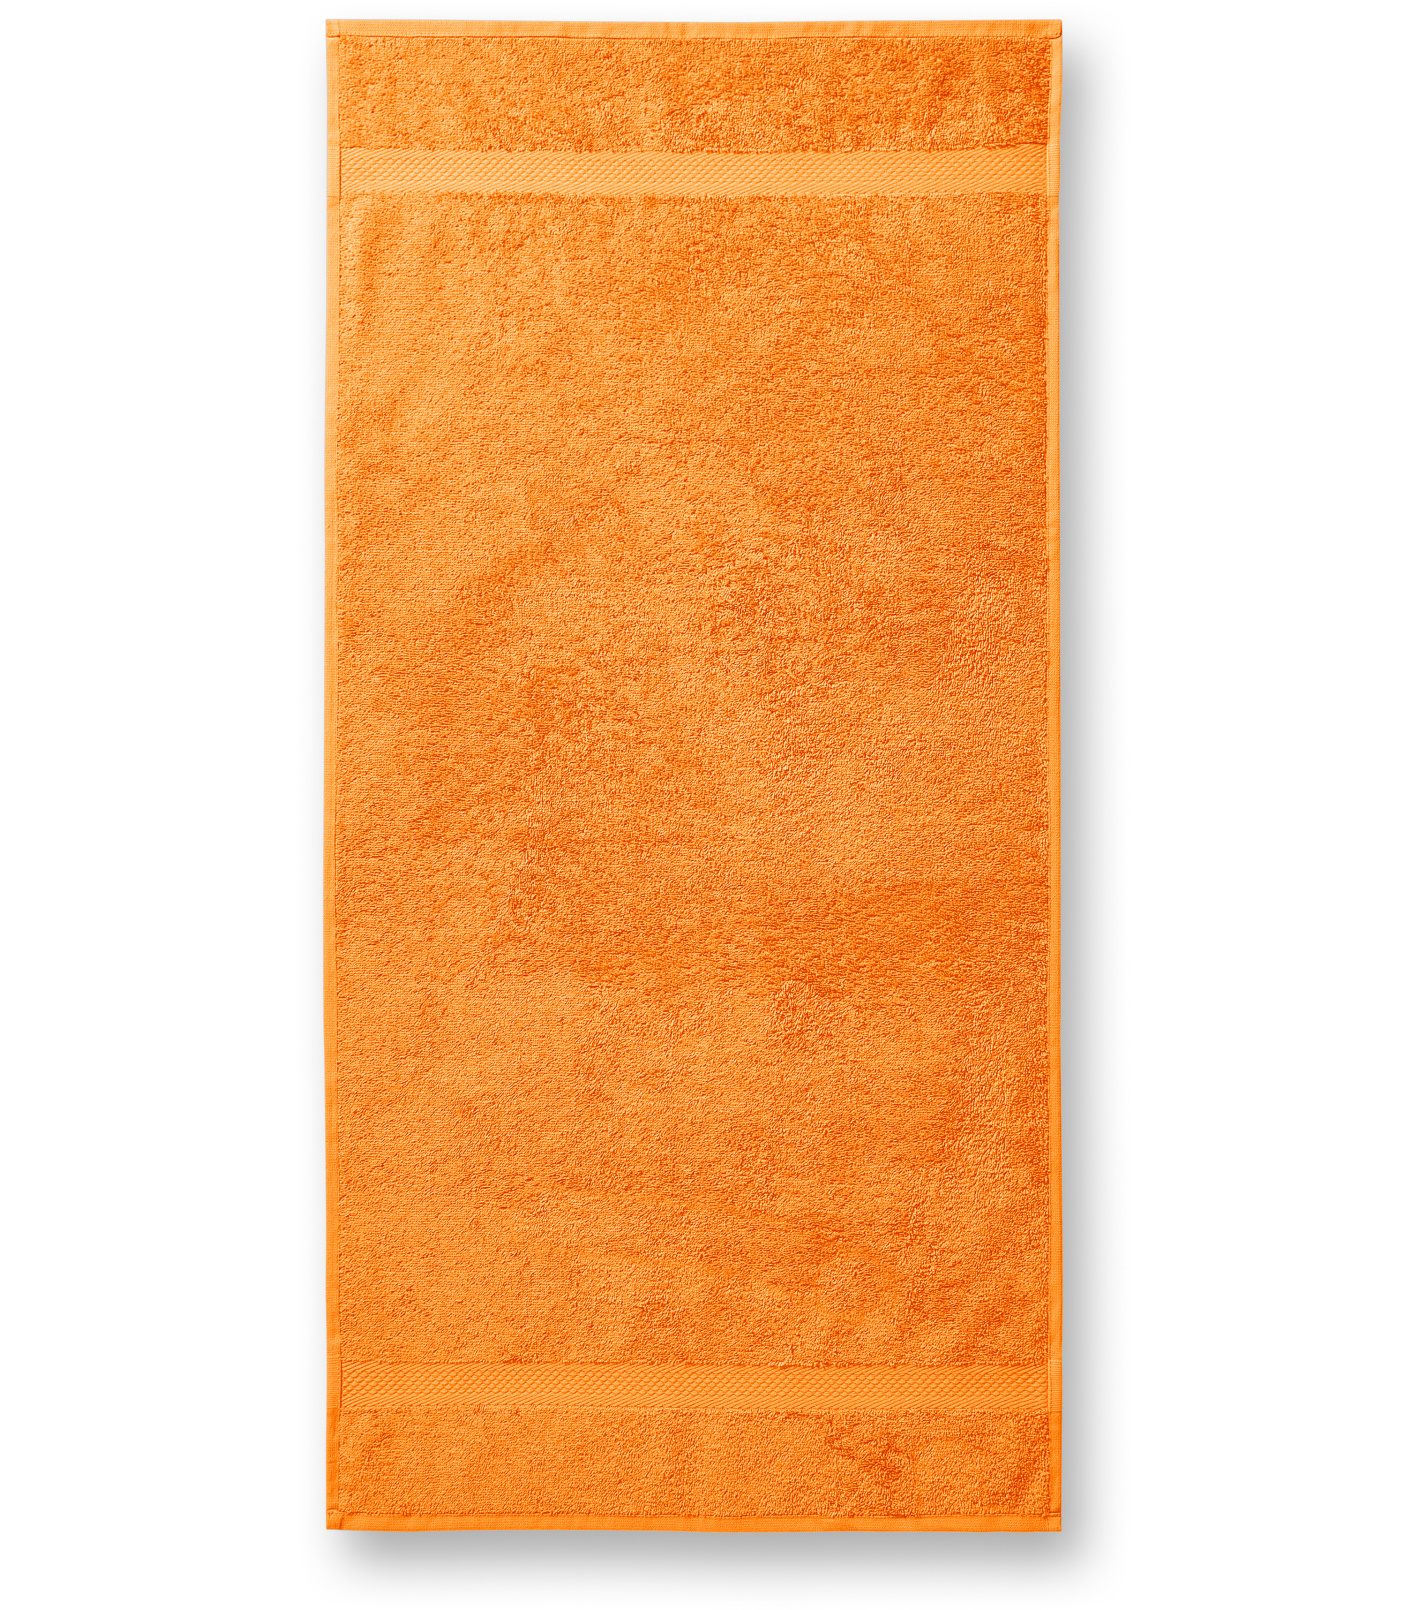 A2 - Tangerine orange (7.22 €)